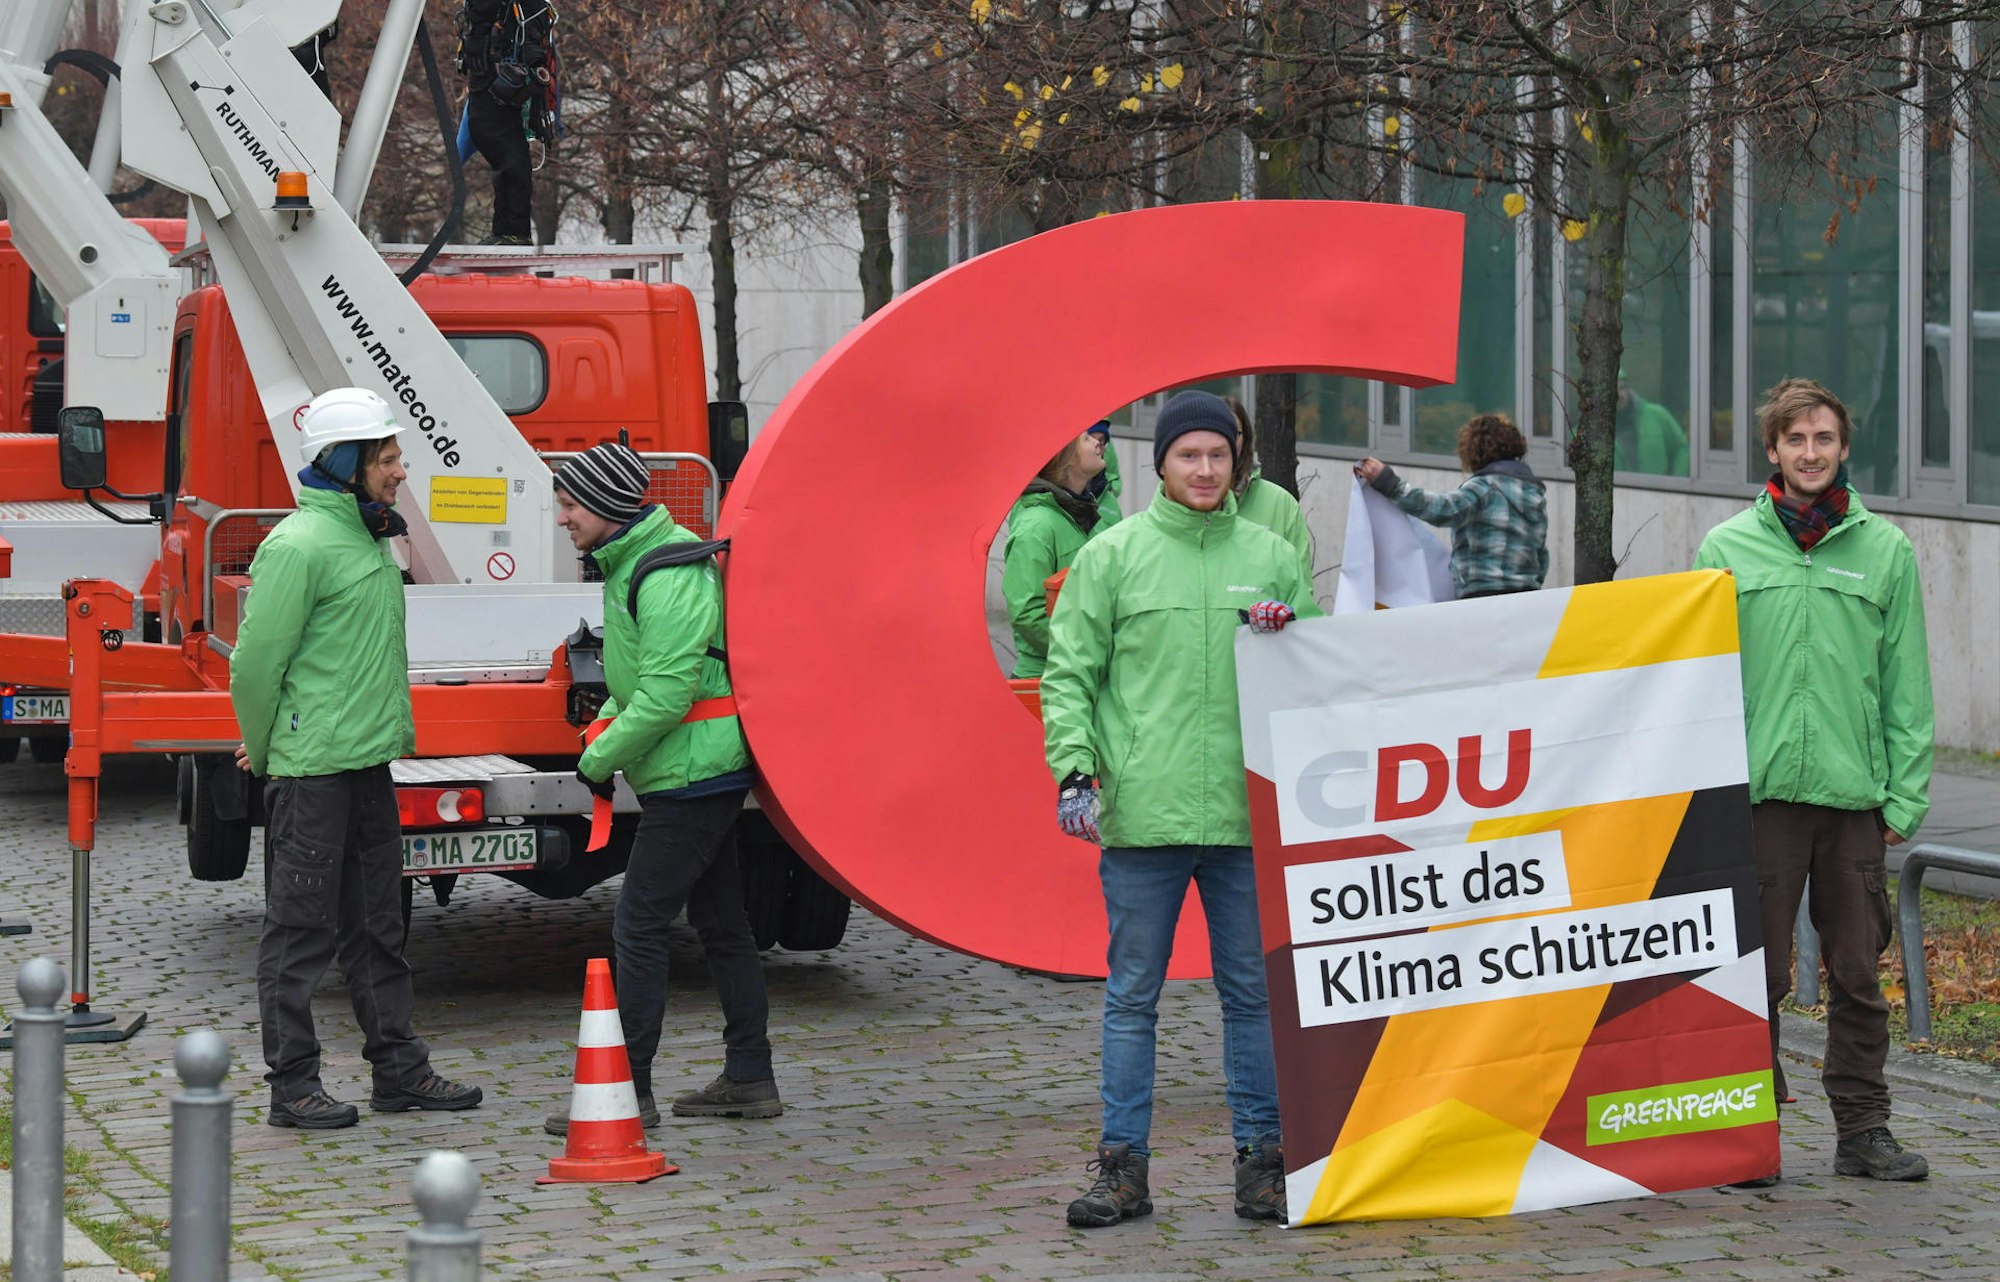 CDU Greenpeace 2